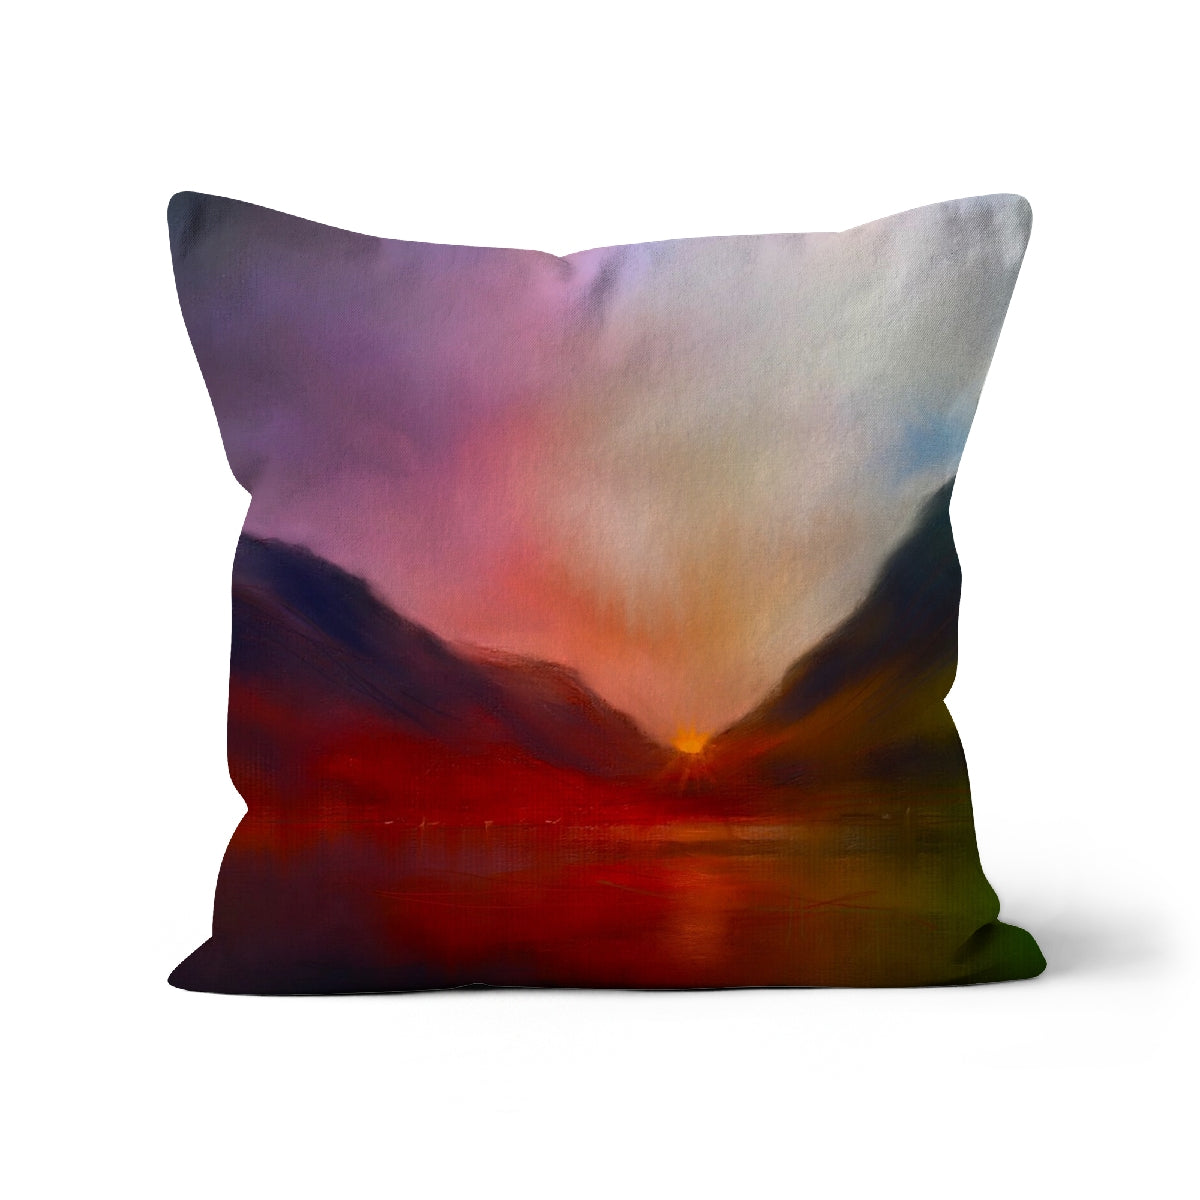 Glencoe Sunset Art Gifts Cushion-Cushions-Glencoe Art Gallery-Canvas-22"x22"-Paintings, Prints, Homeware, Art Gifts From Scotland By Scottish Artist Kevin Hunter